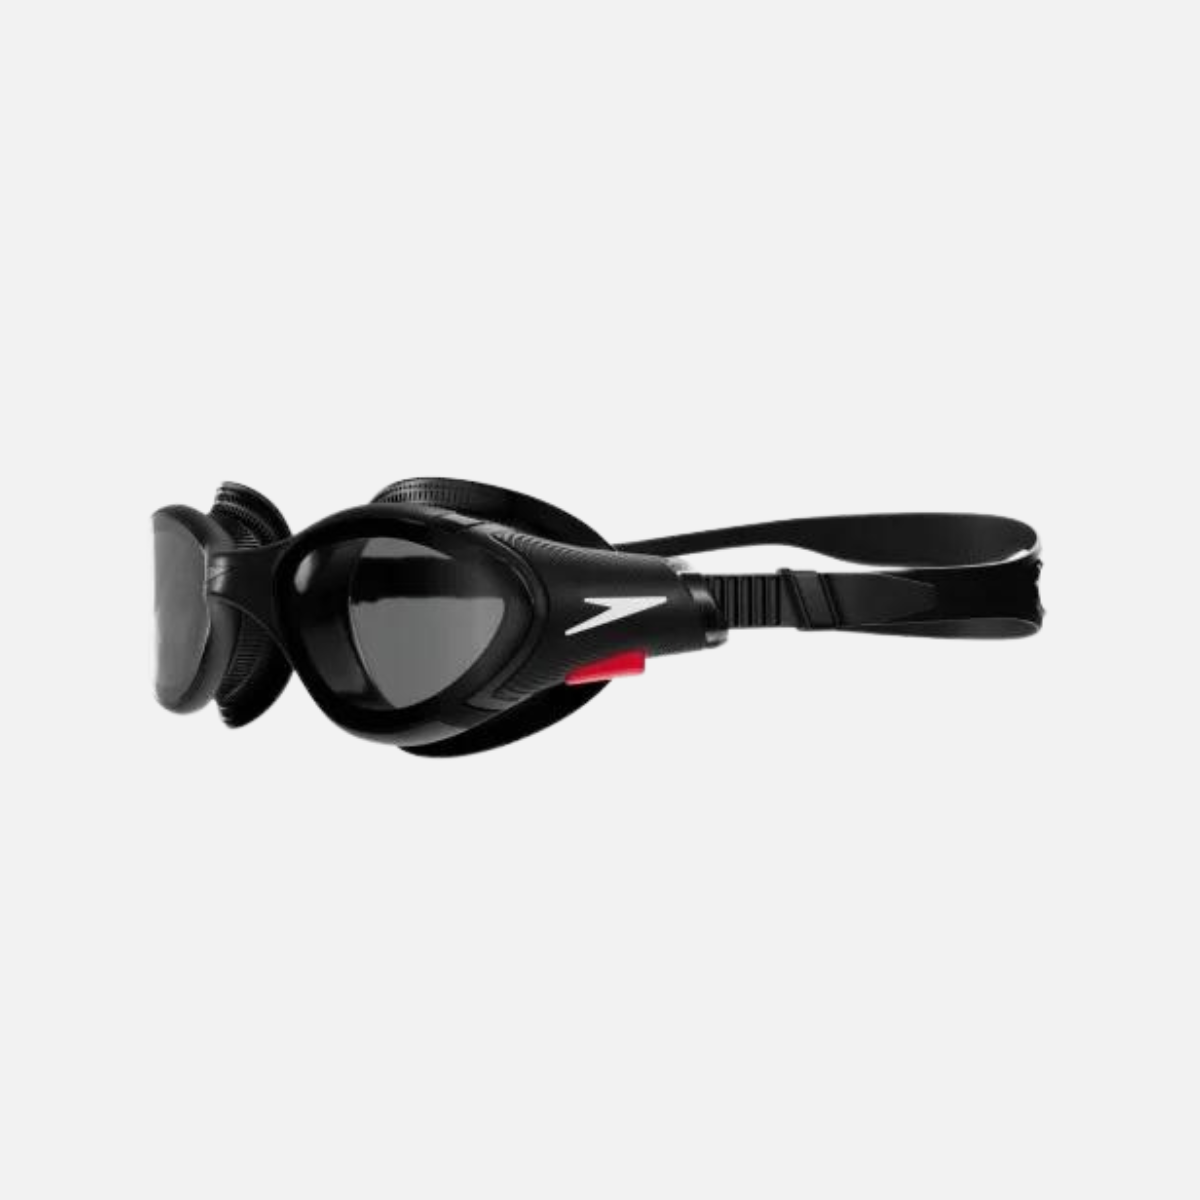 Speedo Biofuse 2.0 Goggles -Clear-Red/Smoke-White/Smoke-Black